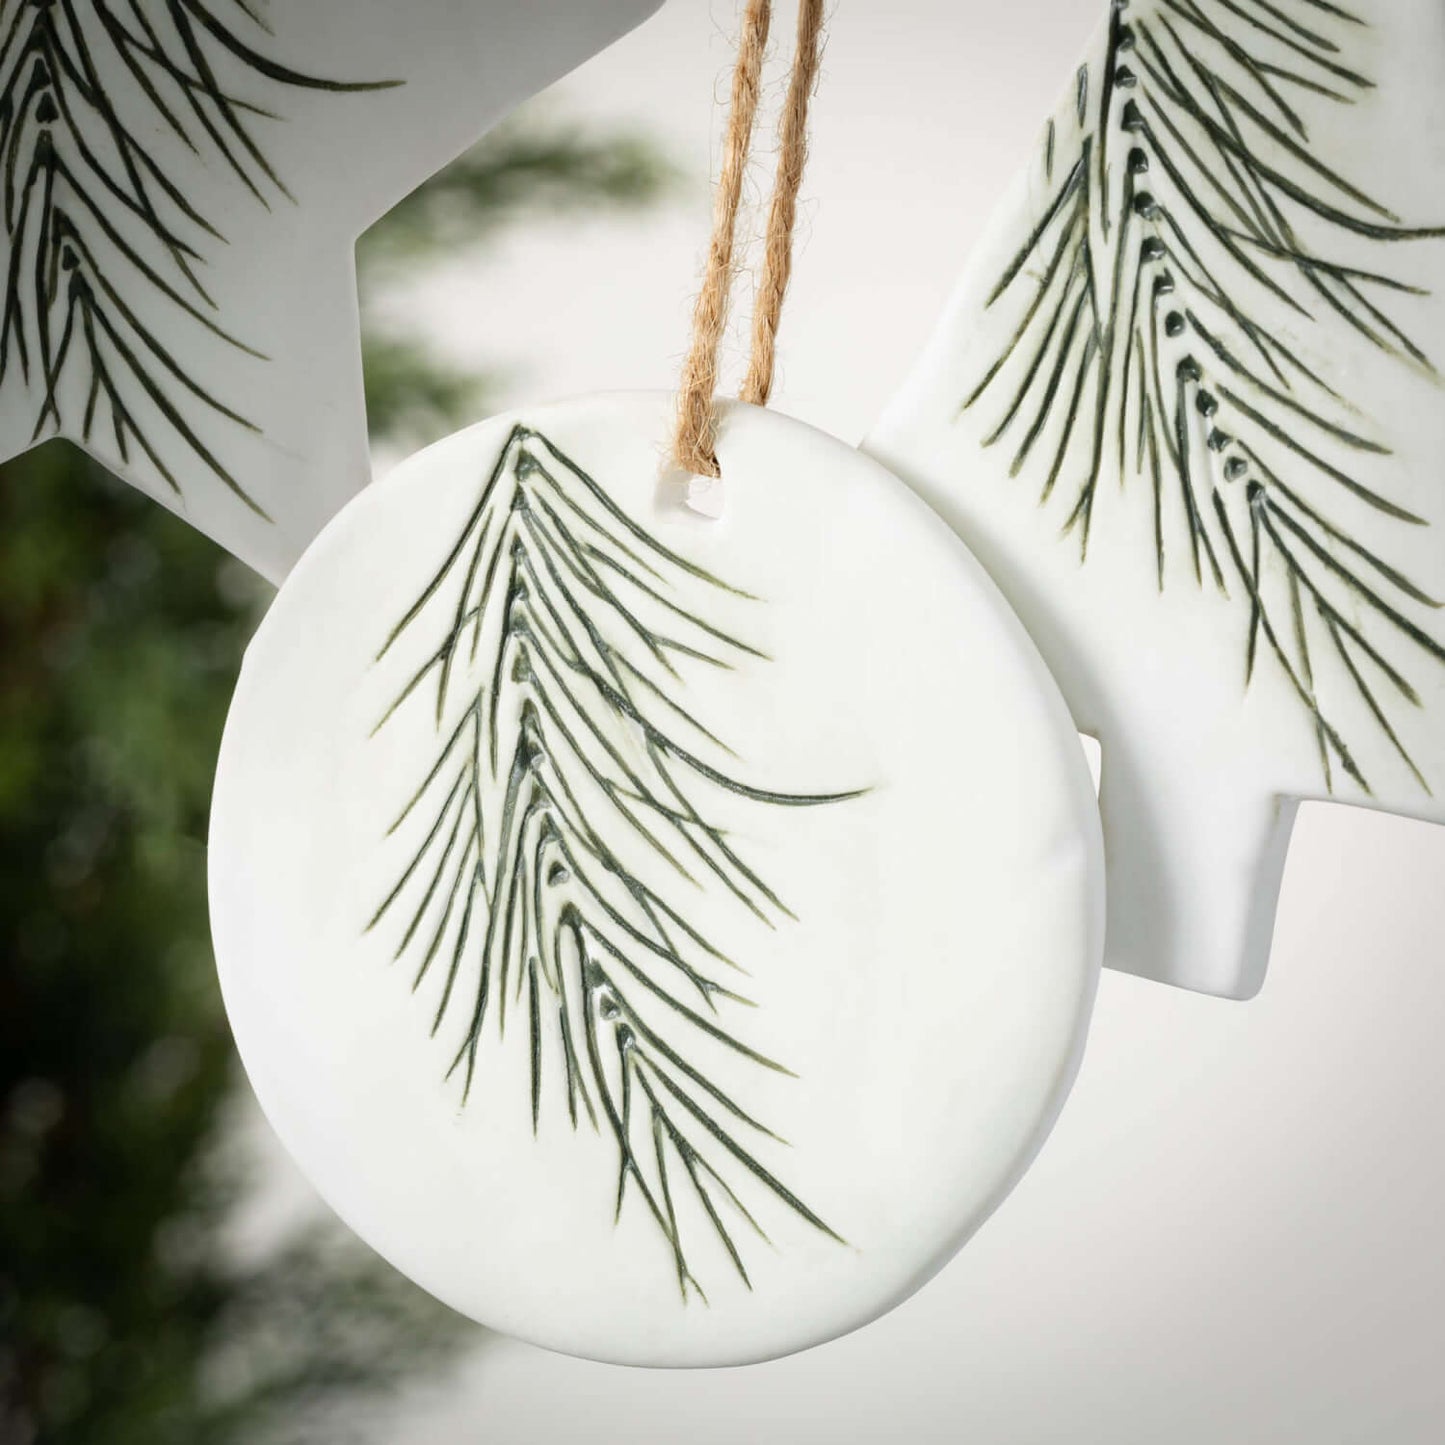 Painted Christmas Tree Ornament